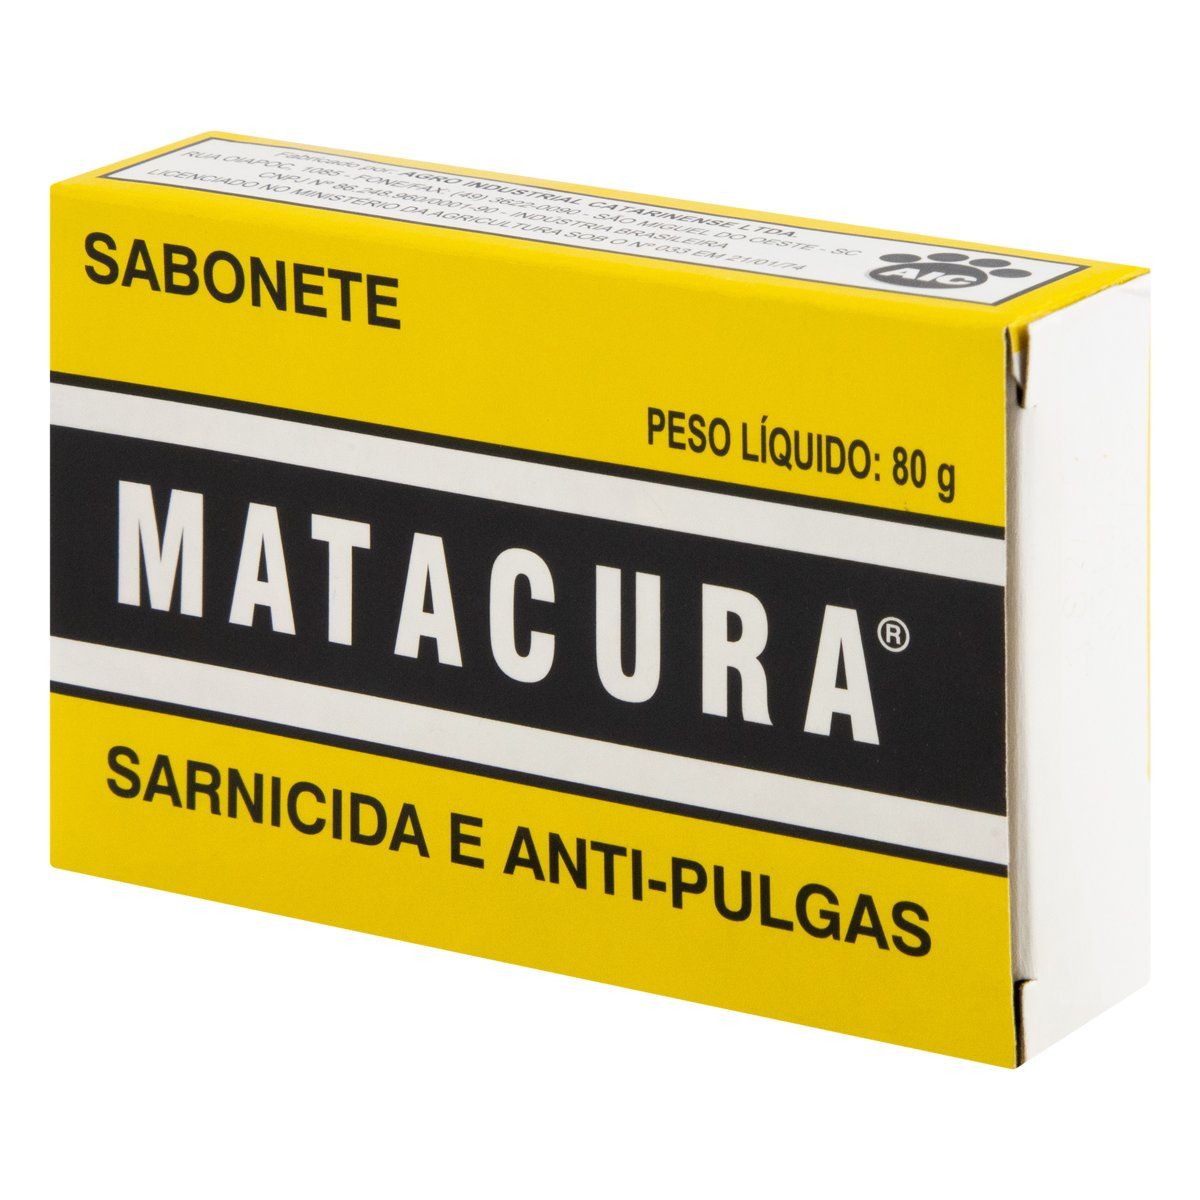 Sabonete Uso Veterinário Matacura Sarnicida e Anti-Pulgas 80g image number 2